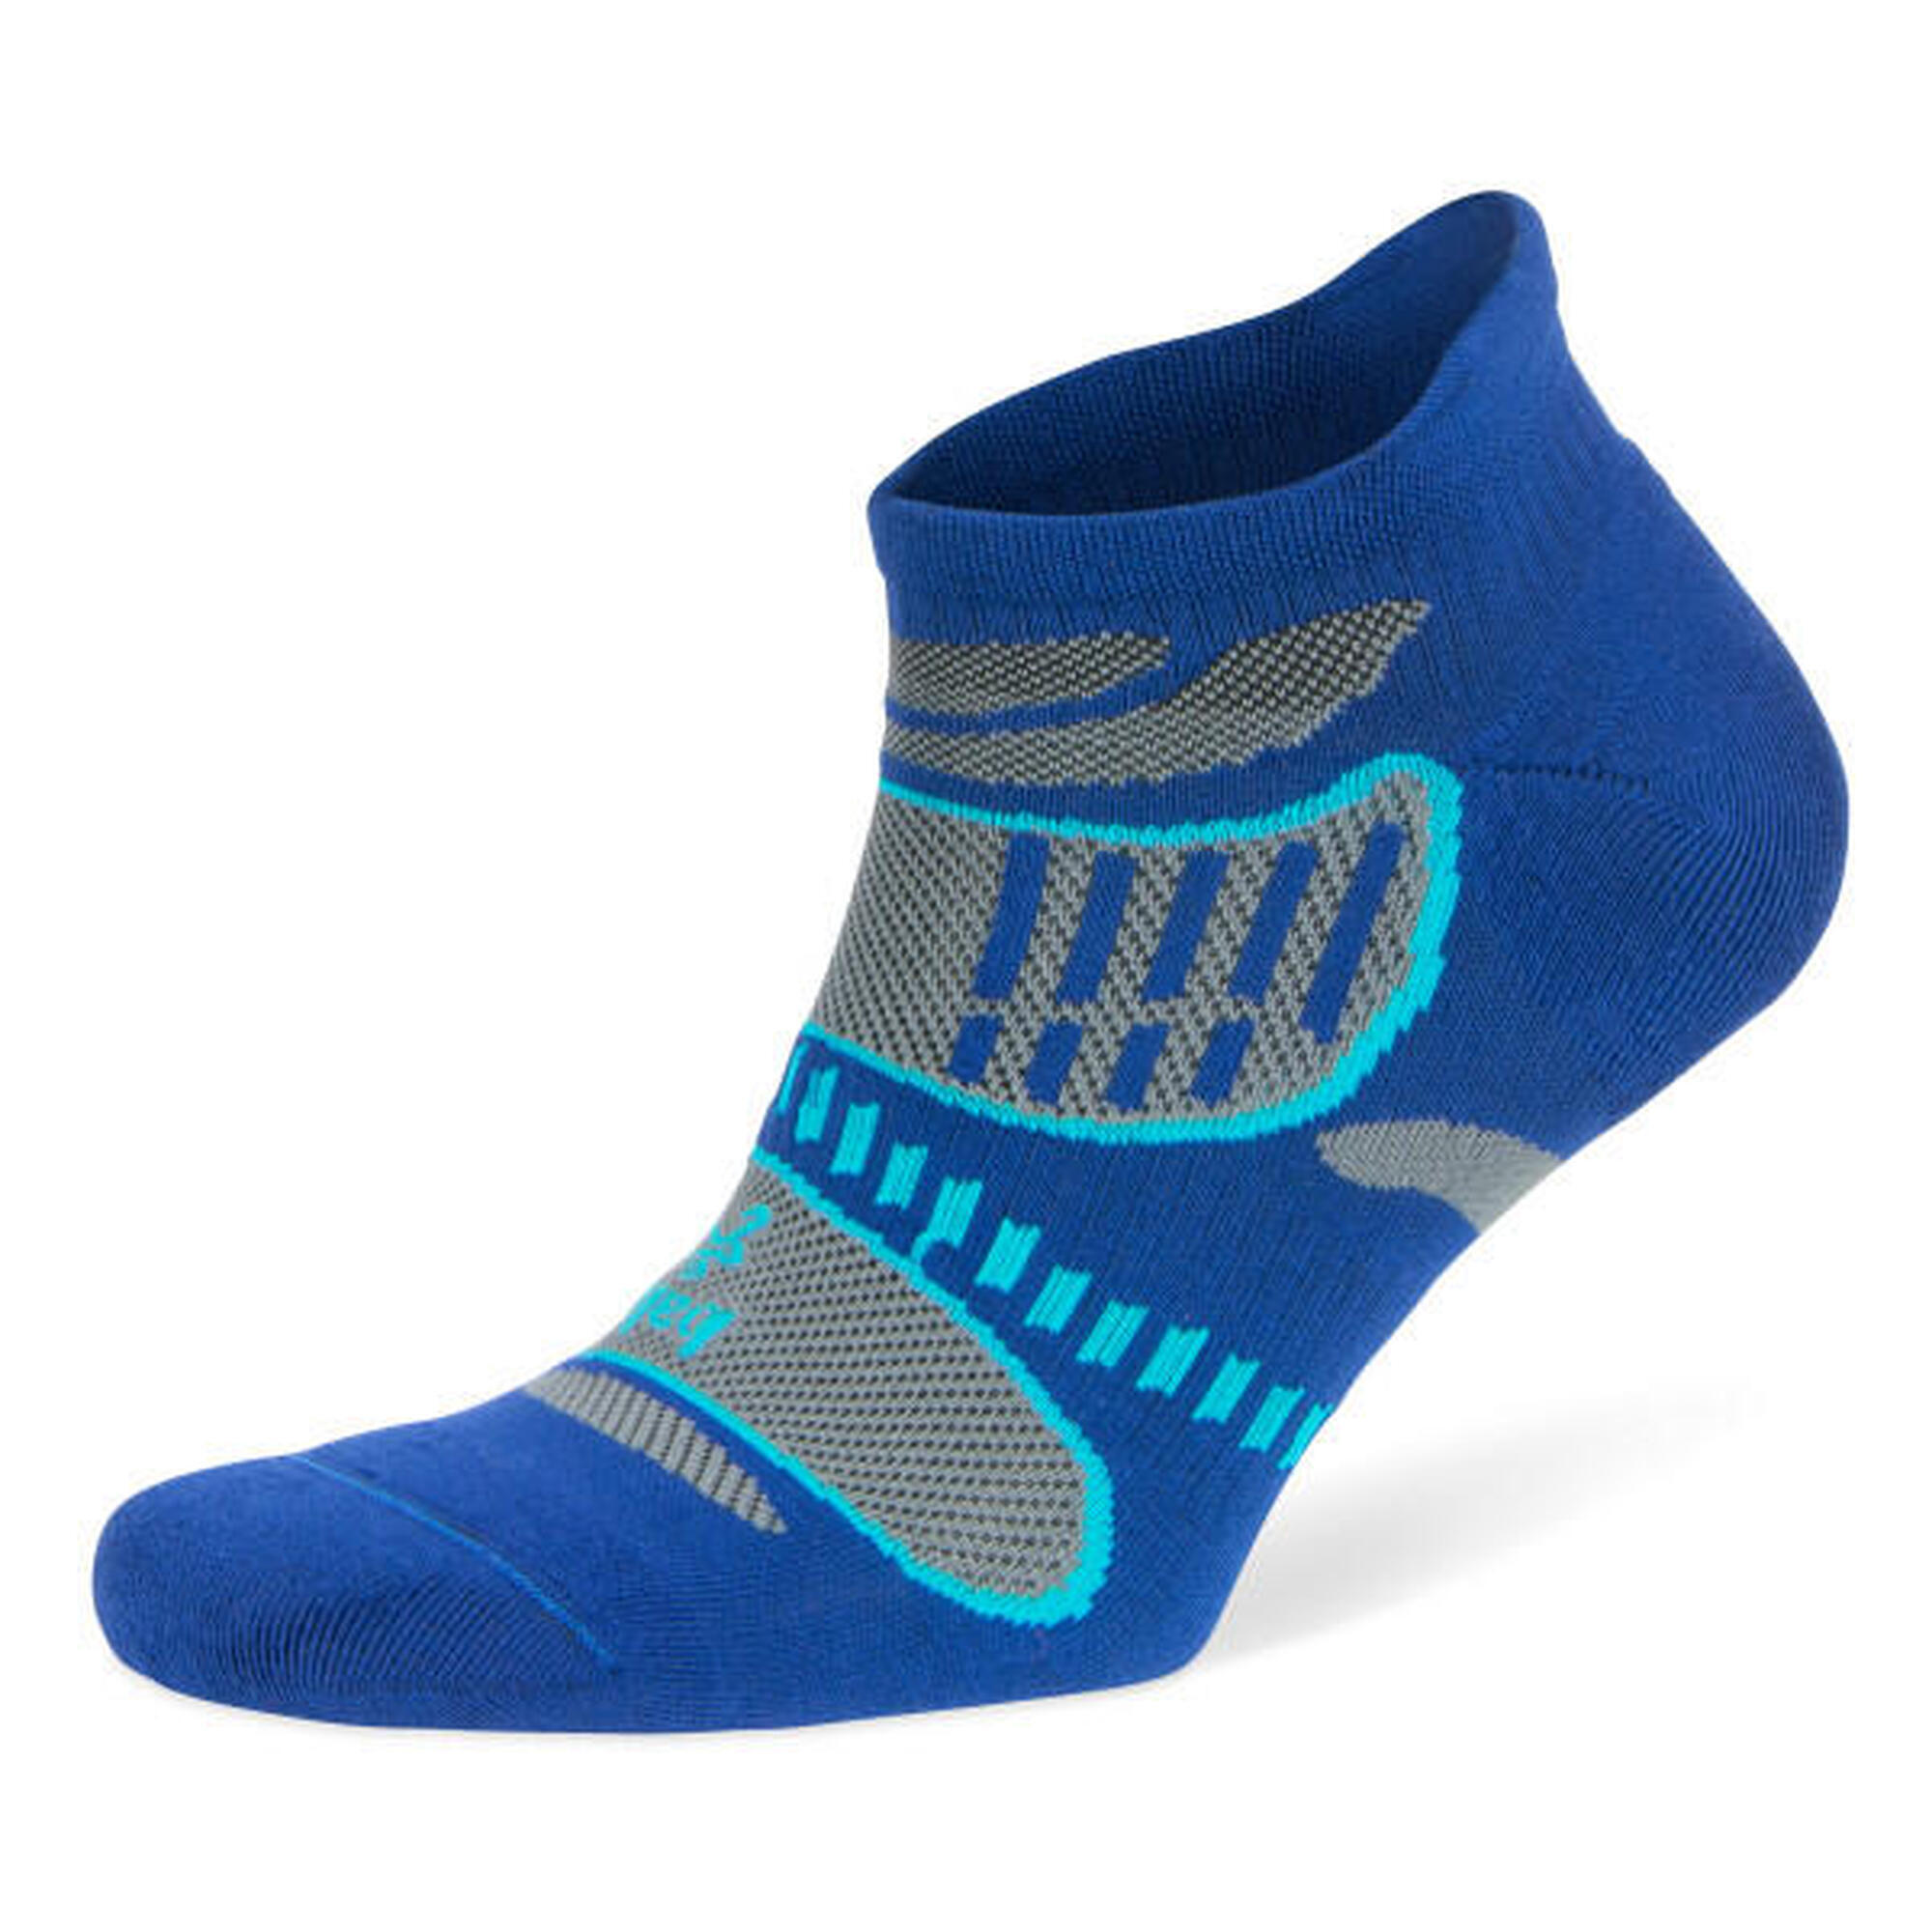 Balega running calcetines: Ligereza, control de la humedad y confort Talla XL